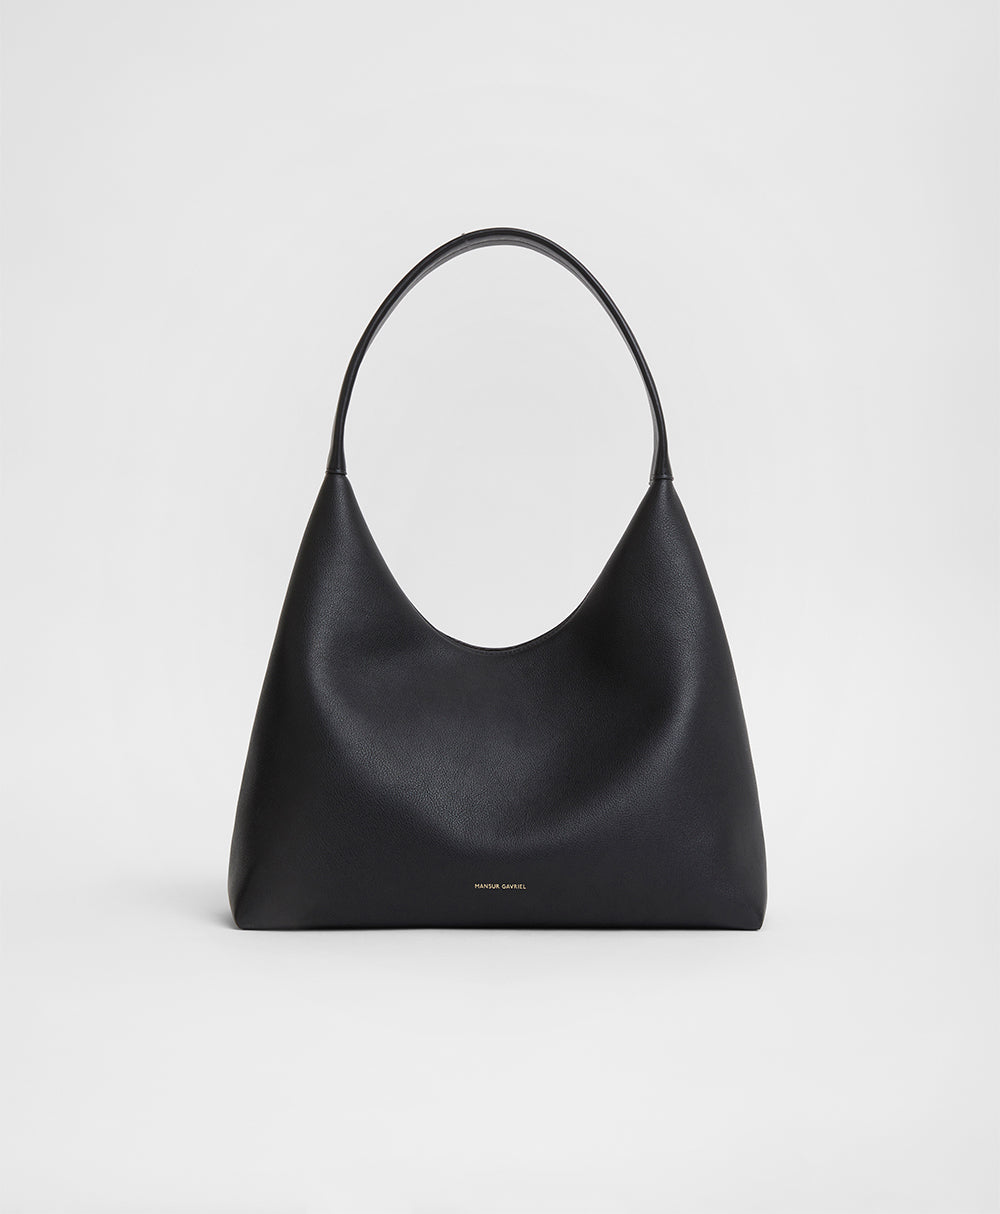 Furla Candy Bags & Handbags for Women for sale | eBay